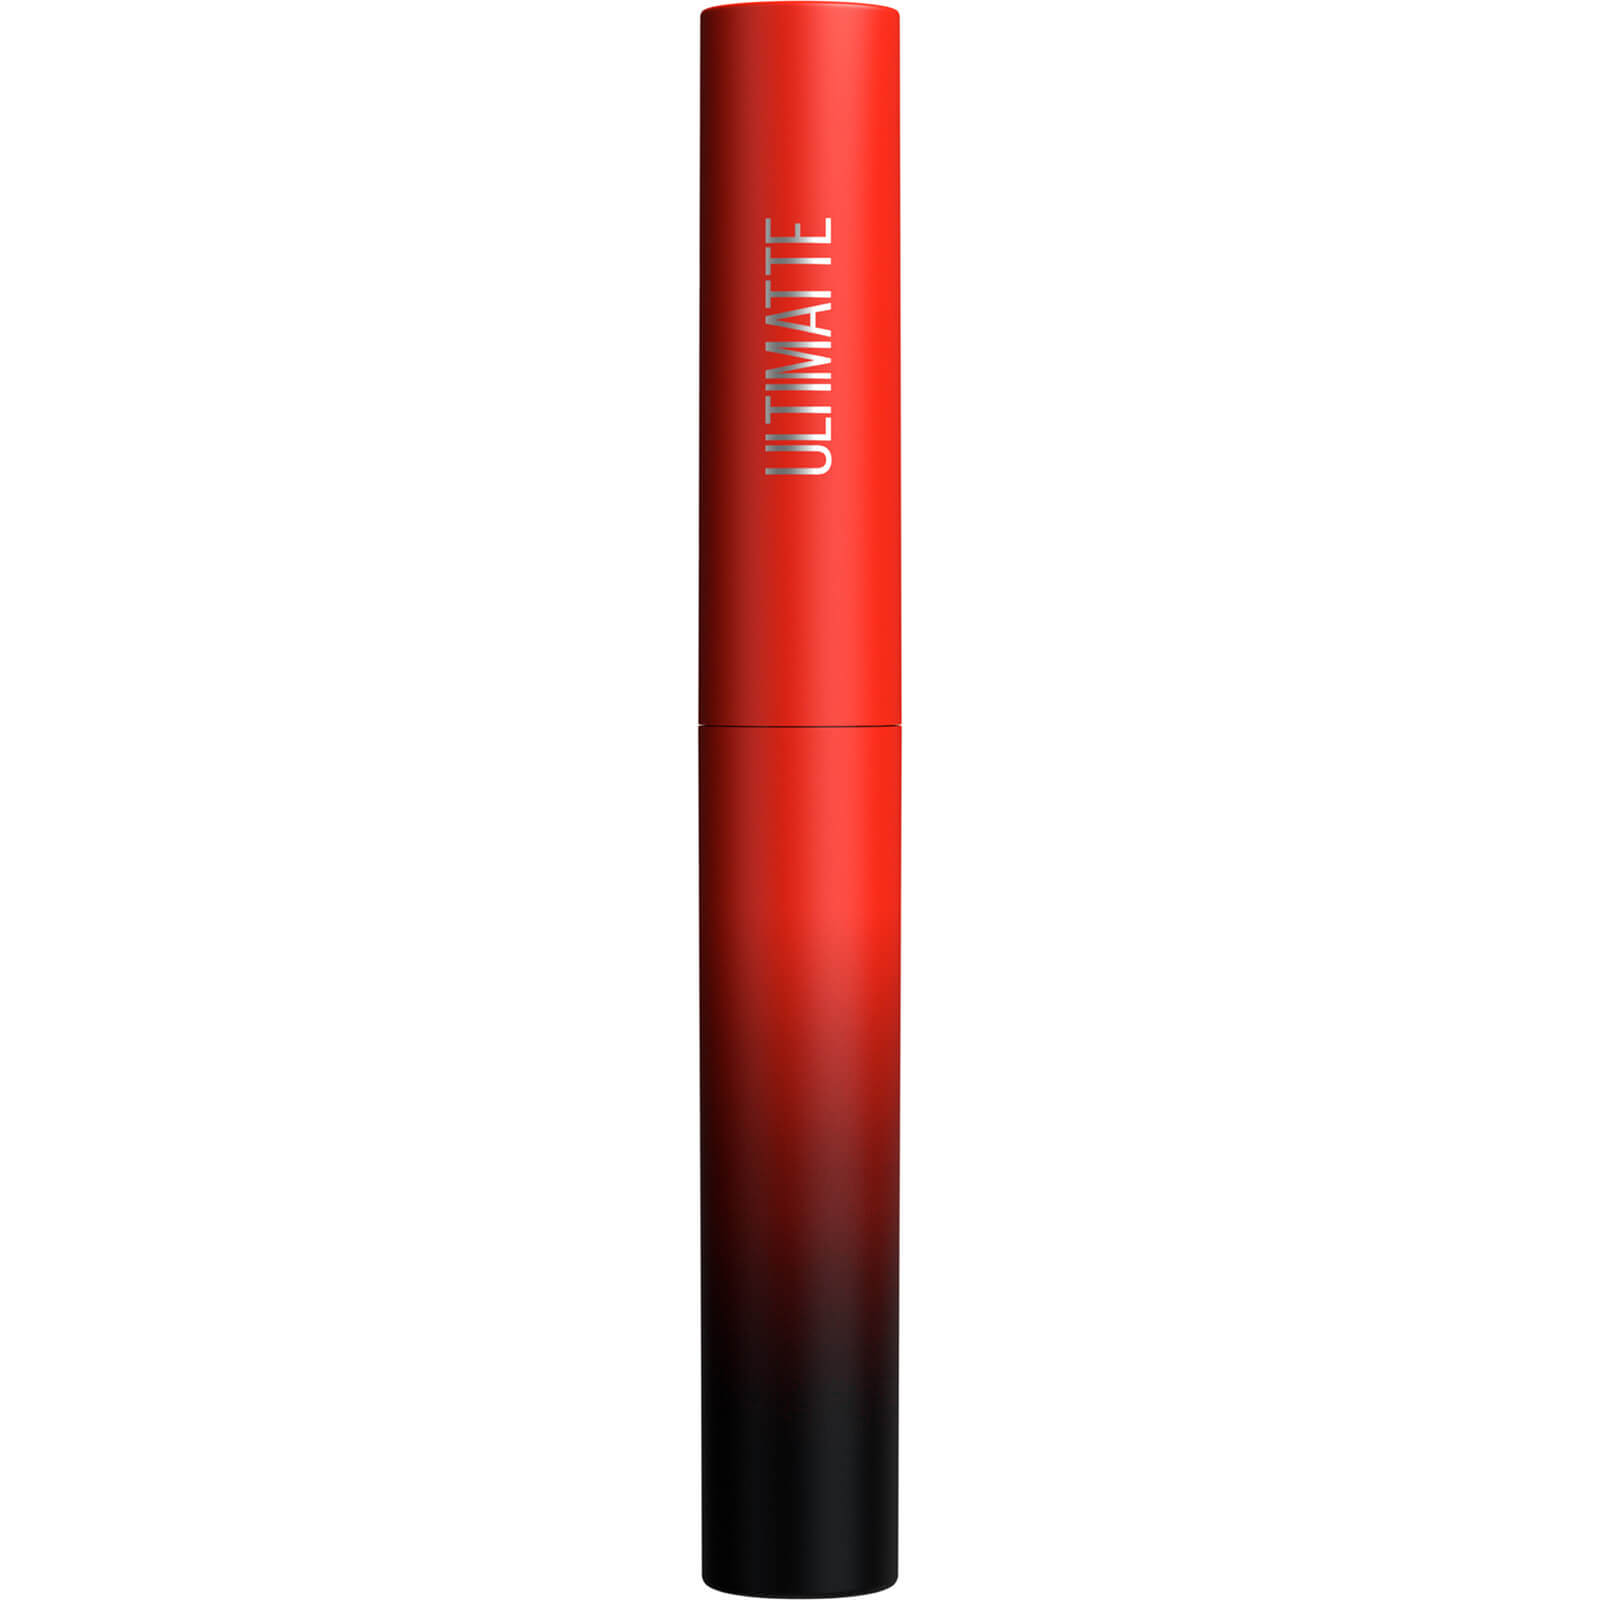 Maybelline Colour Sensational Ultimatte Slim Lipstick 25g (Various Shades) - More Scarlet